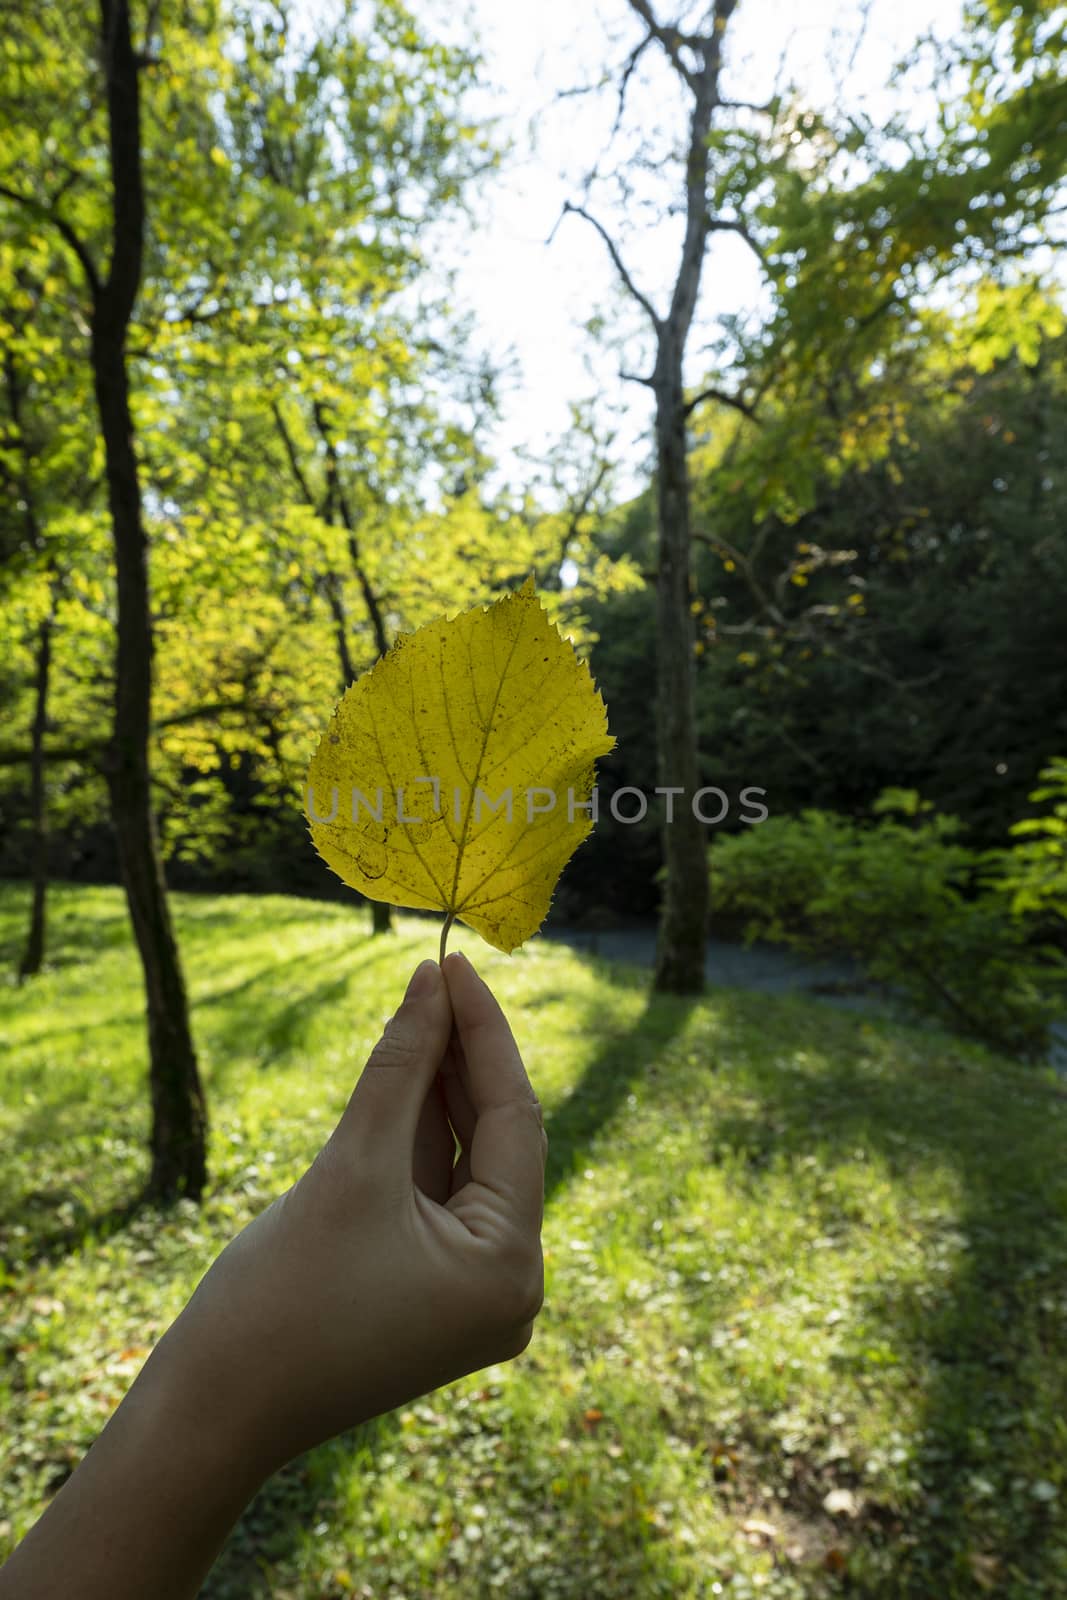 Leaf in autumn by sergiodv